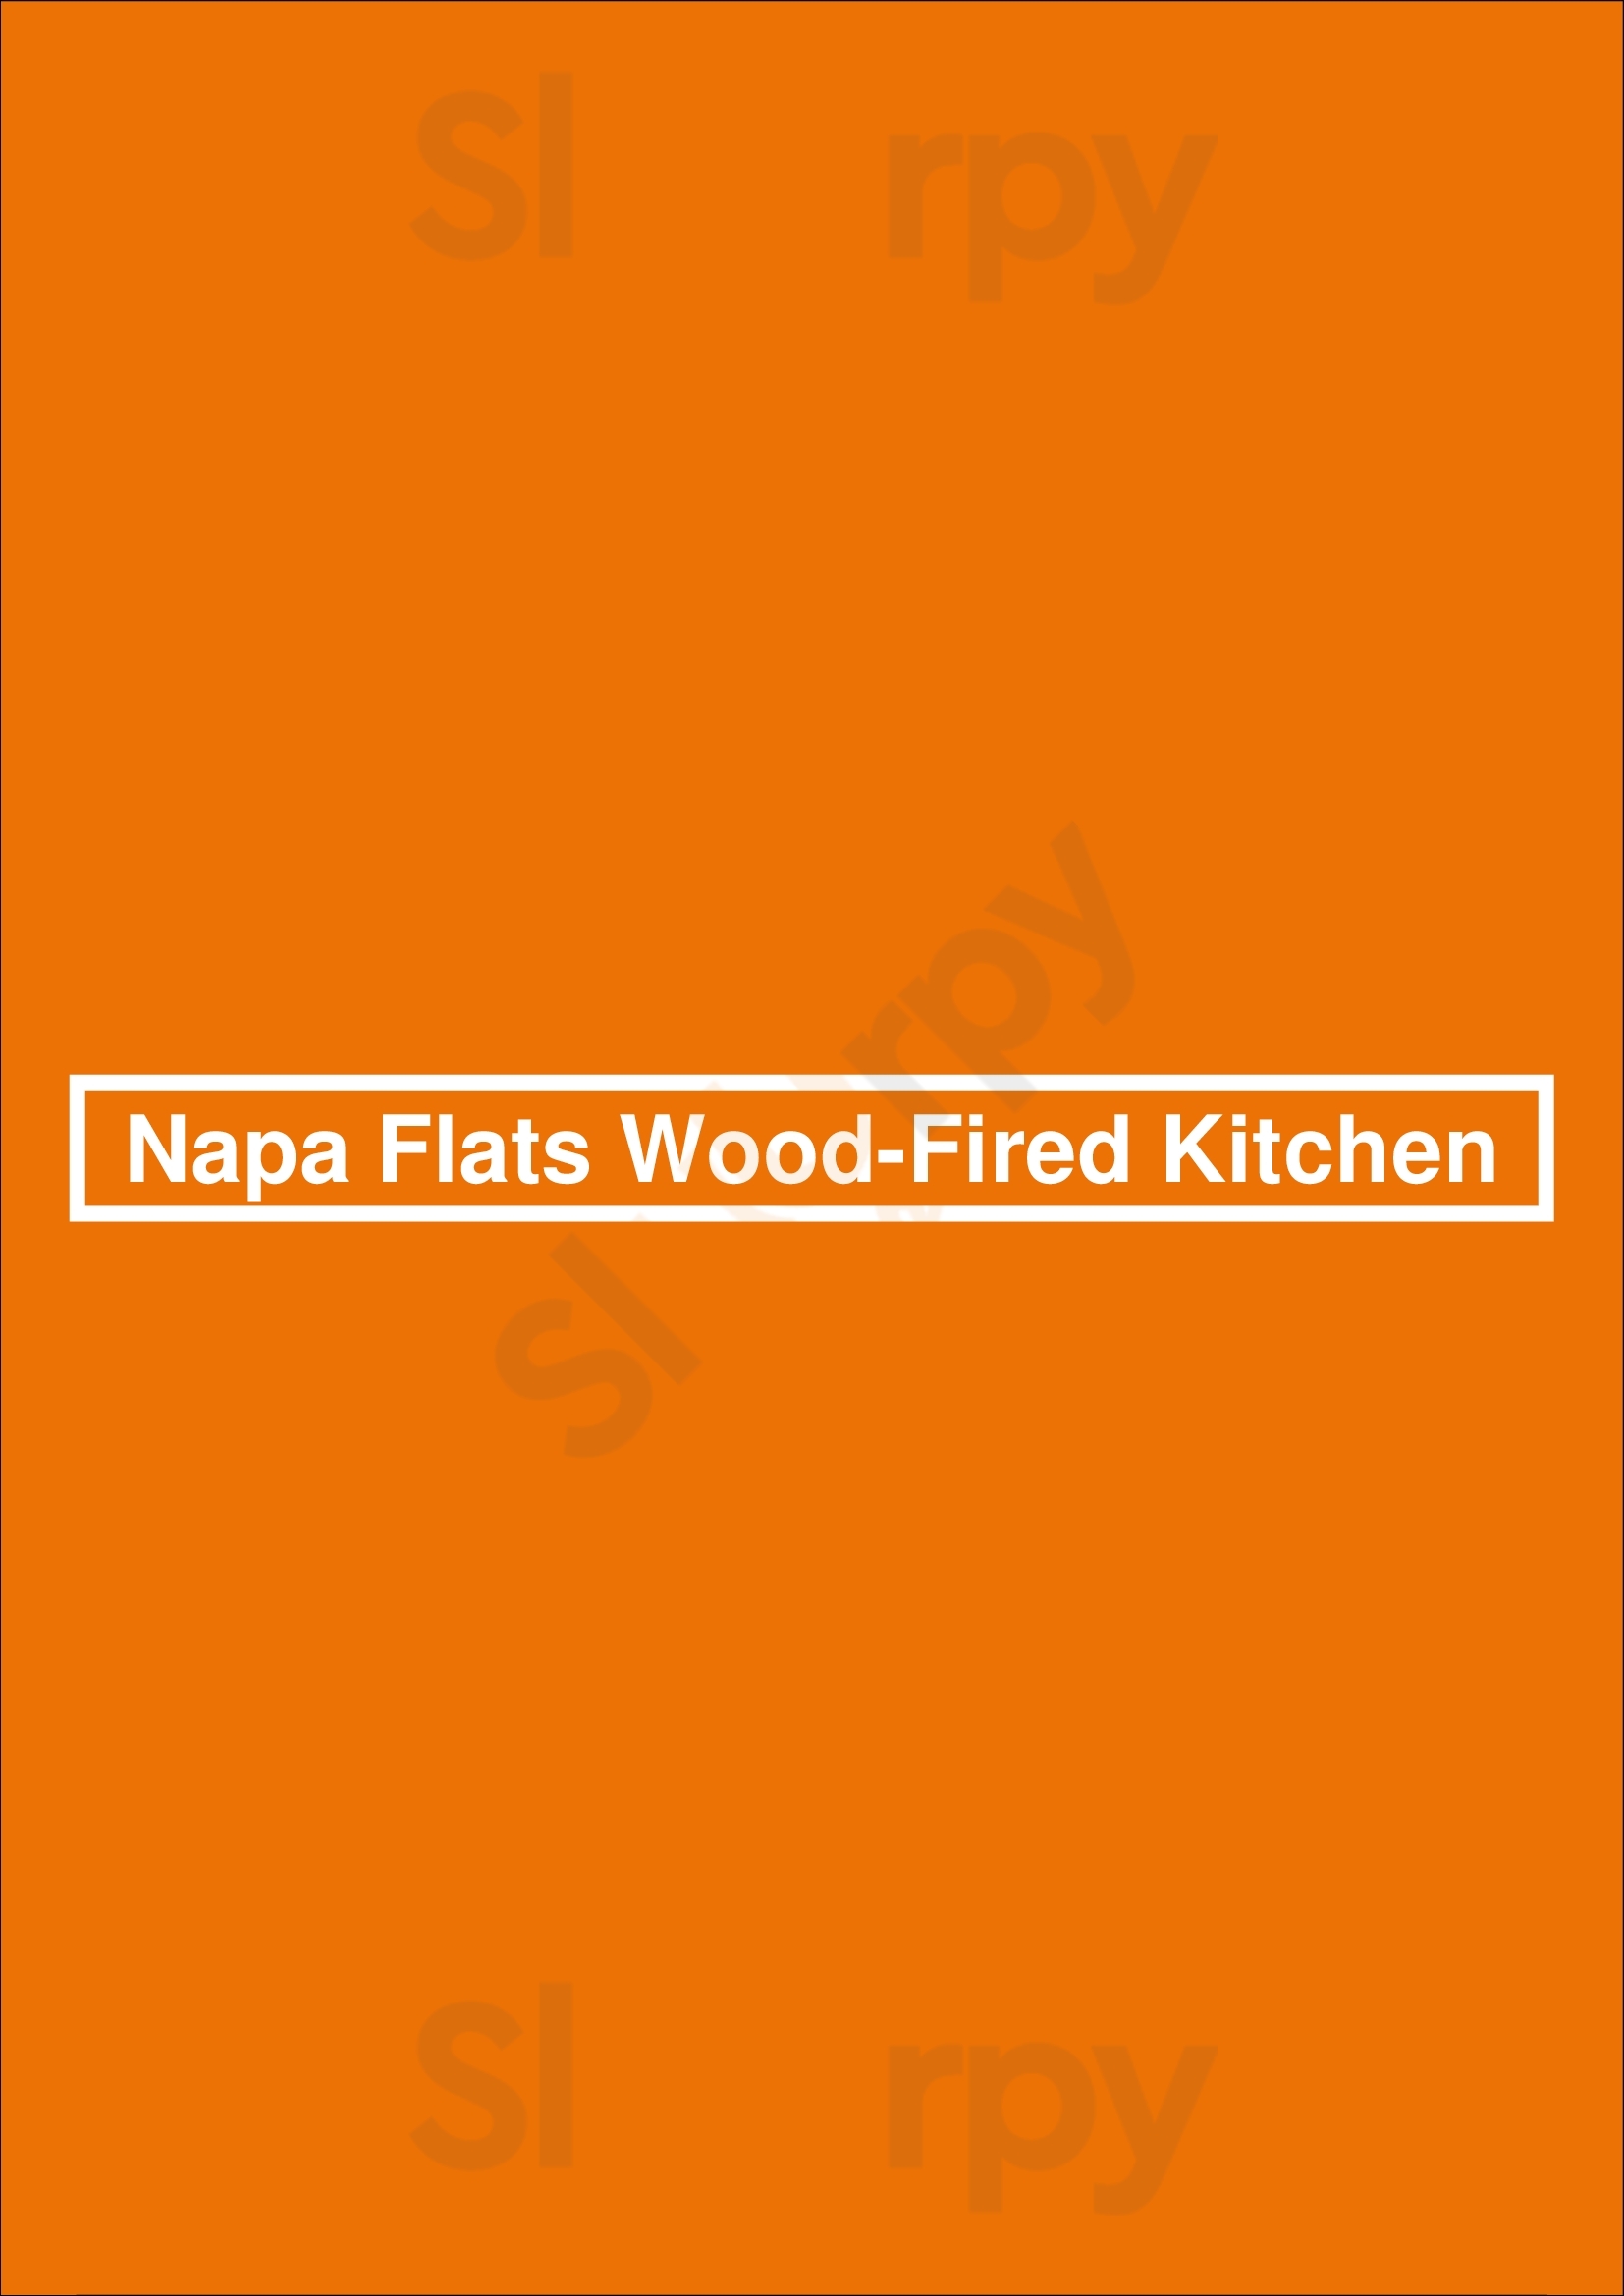 Napa Flats Wood-fired Kitchen Tulsa Menu - 1